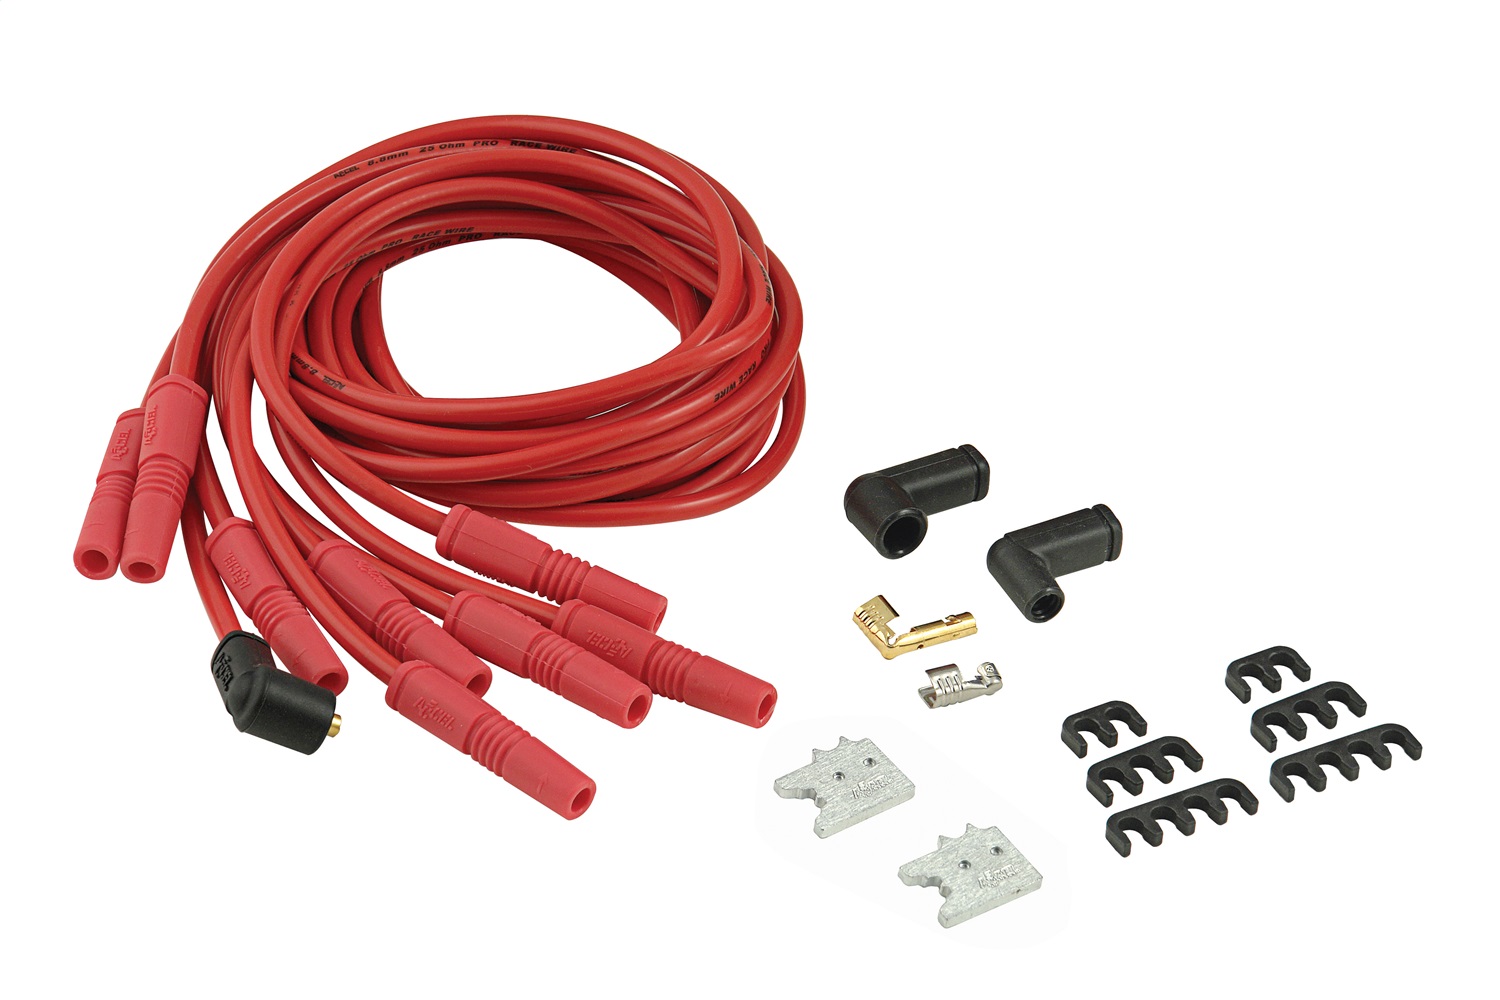 ACCEL ACCEL 257040 Pro 25 Race Wire Universal Kits